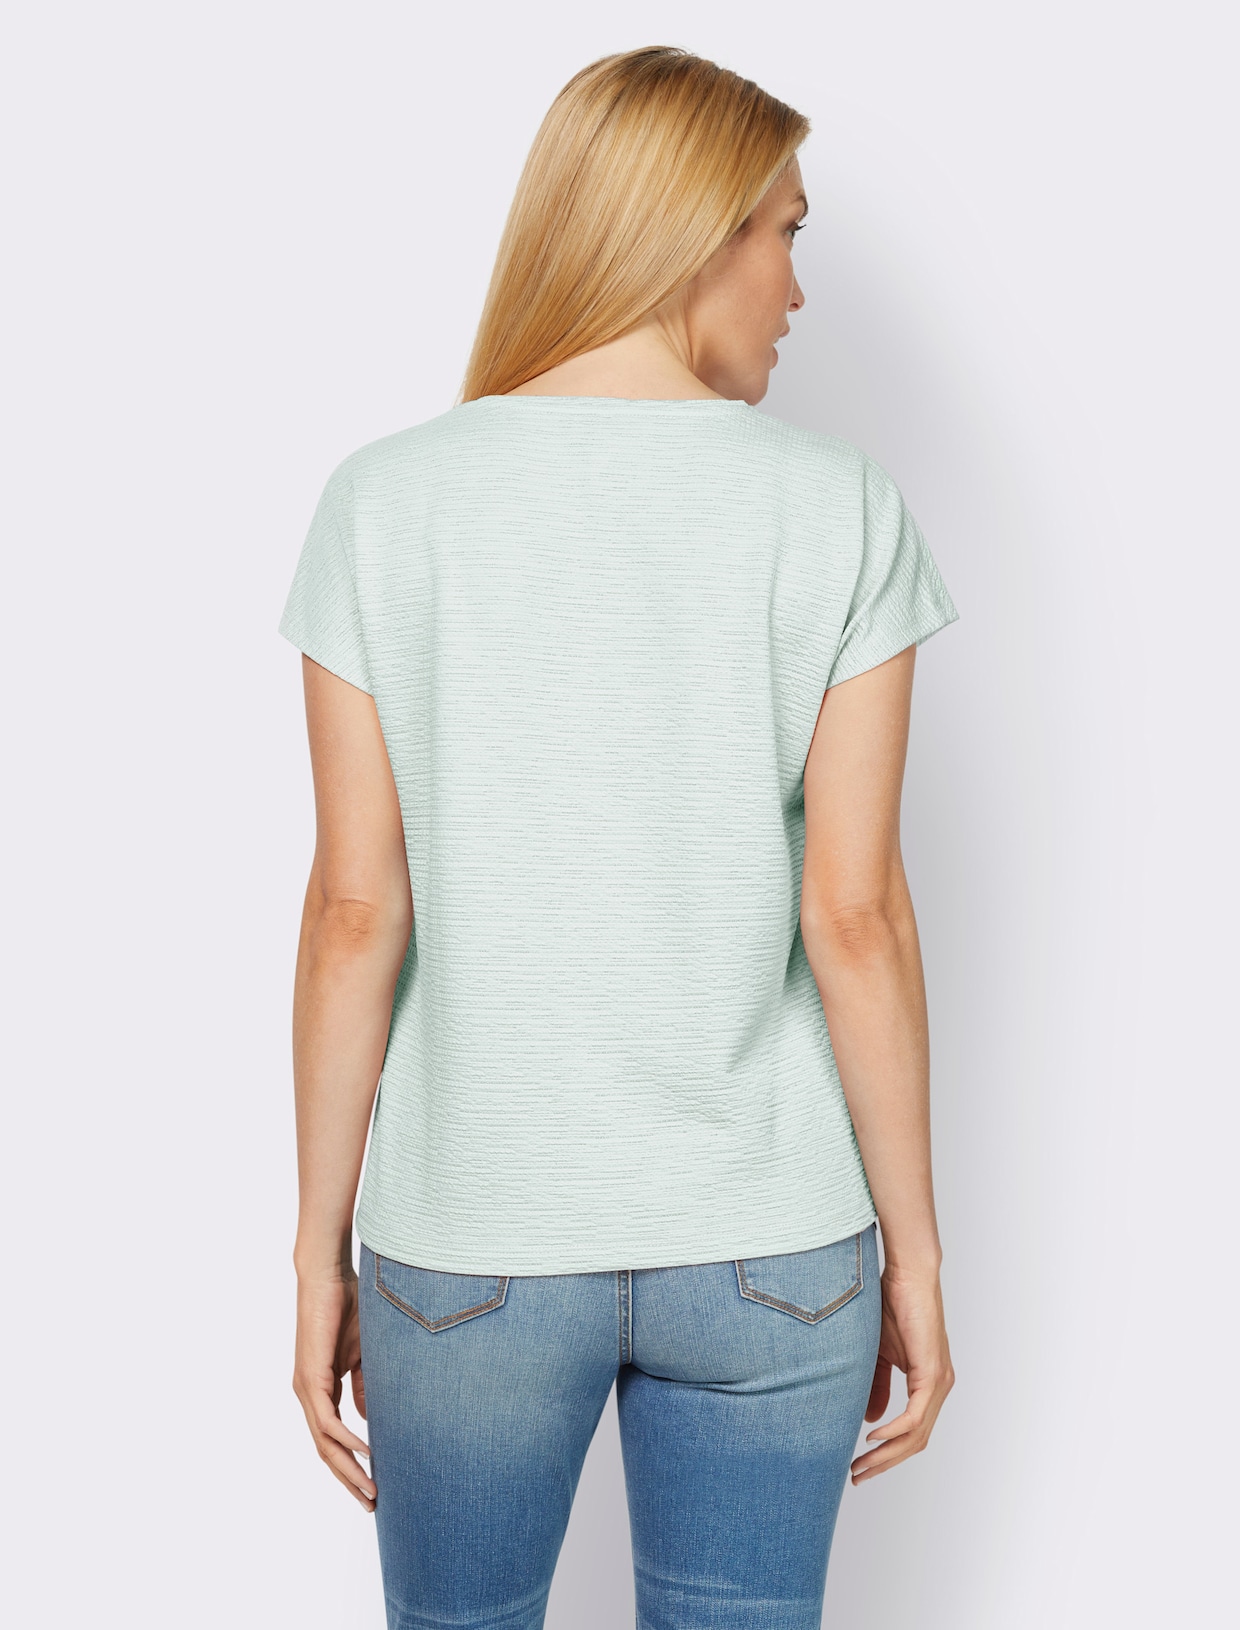 heine Shirt - zacht mint